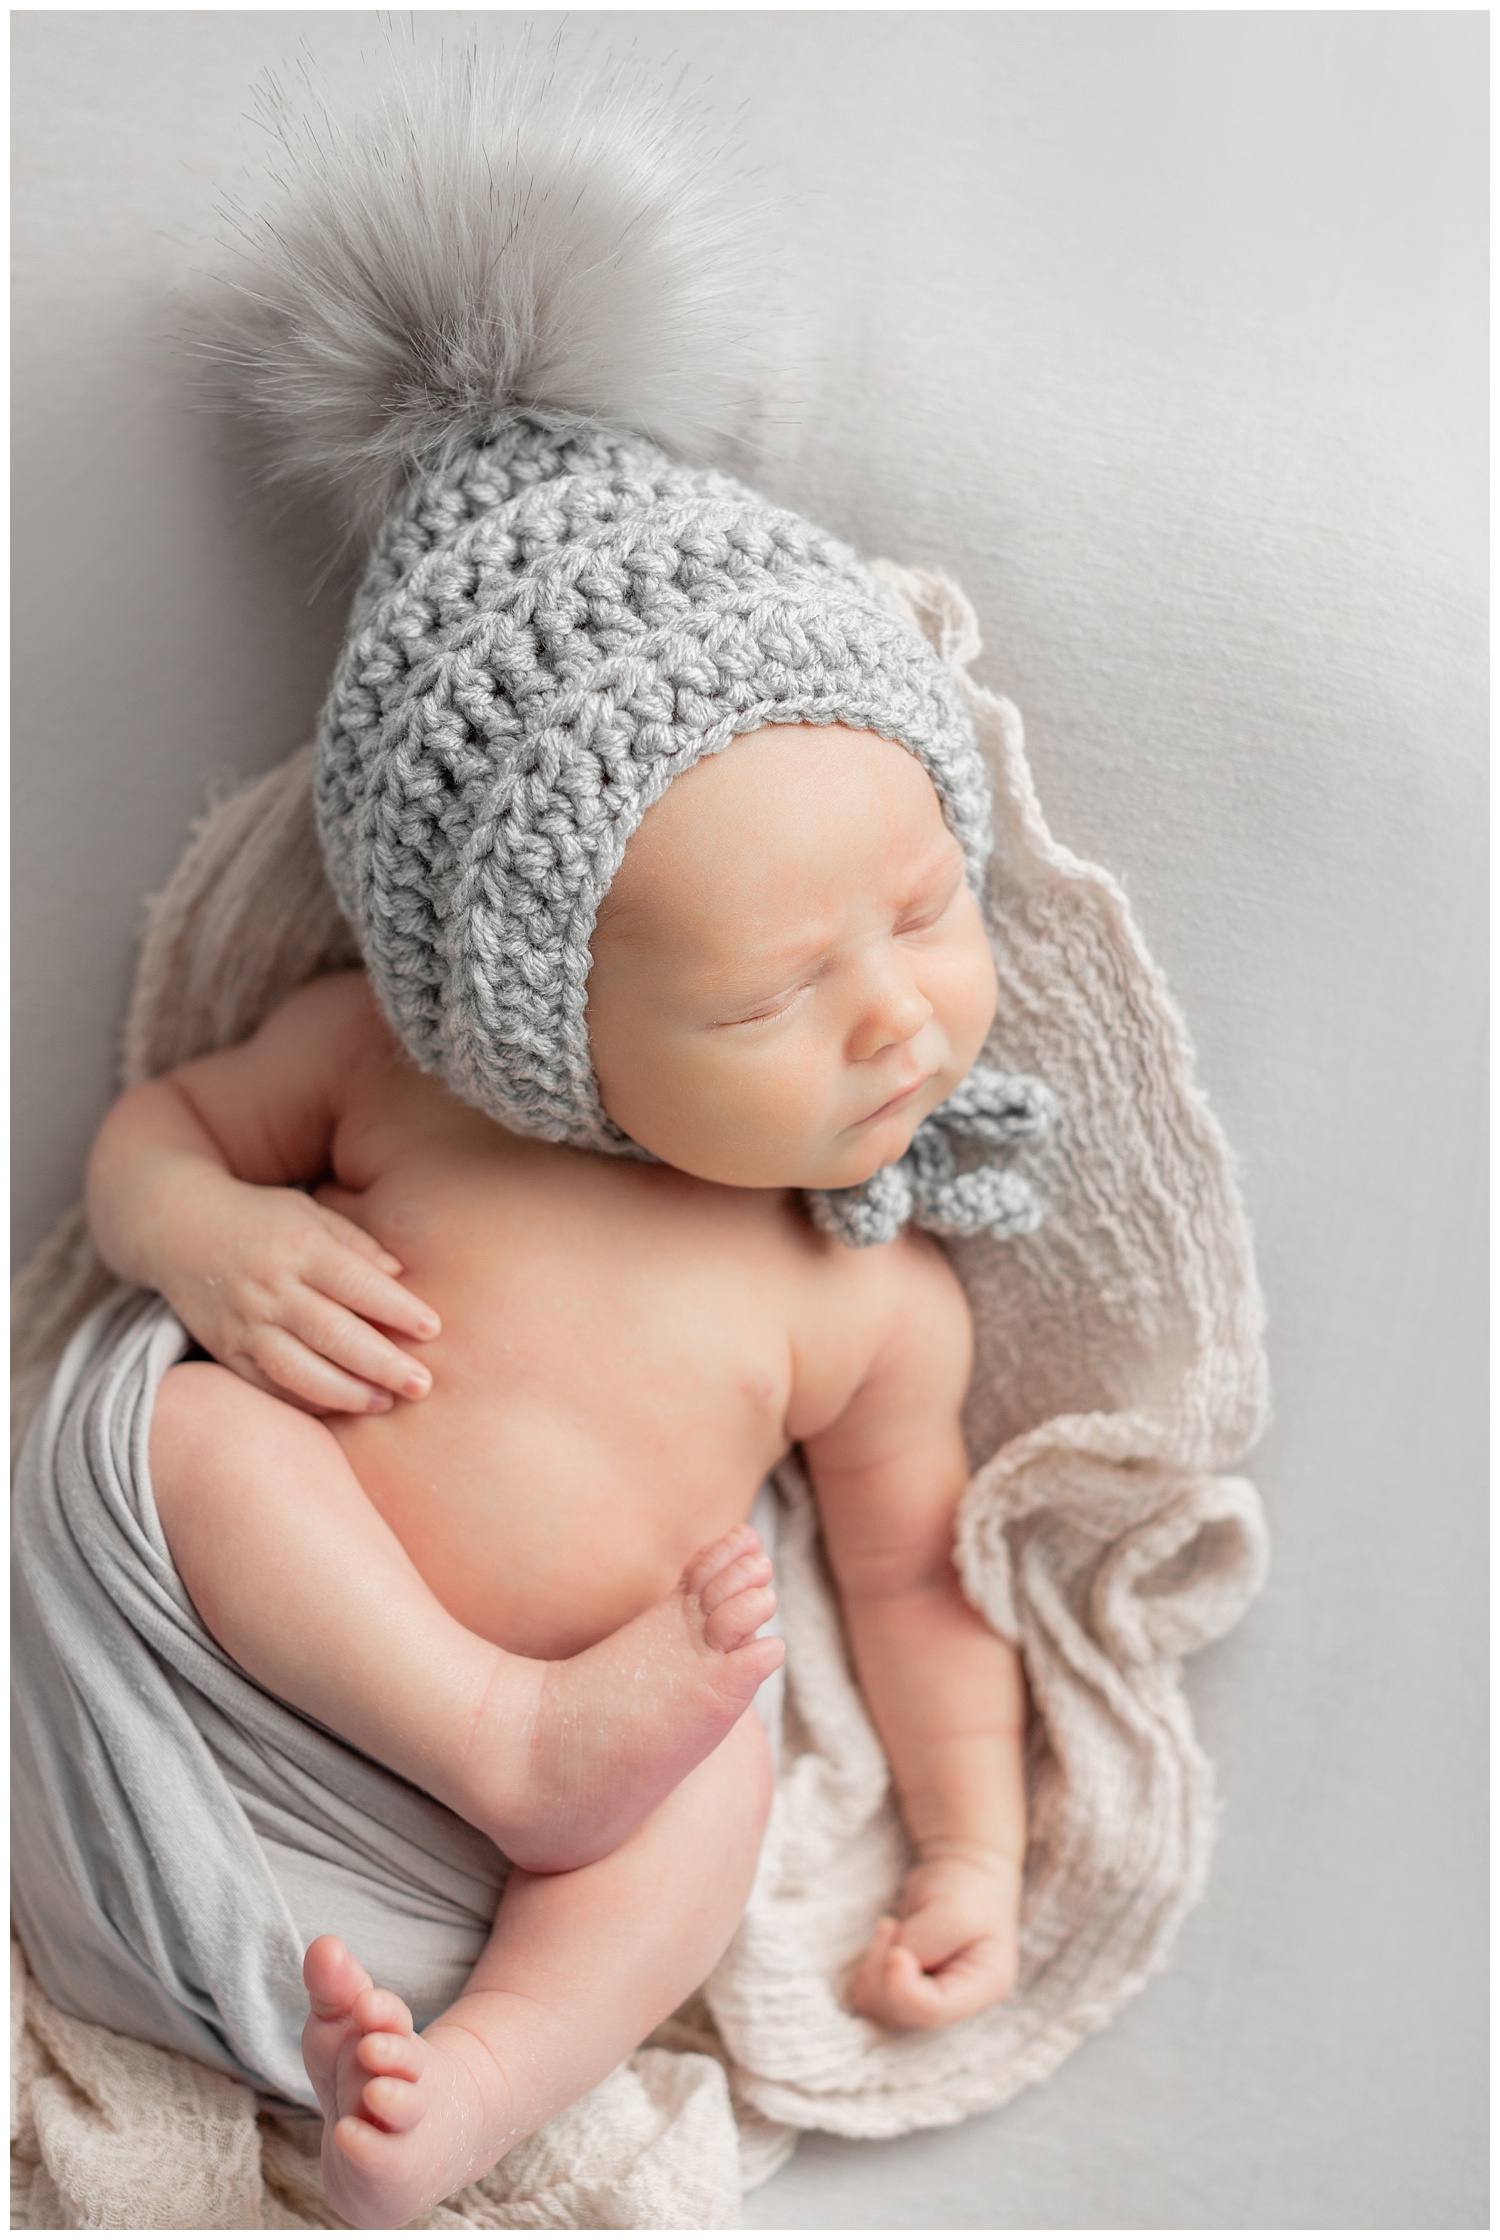 Baby Braxton sleeps soundly on a grey fabric background wearing a grey knit pom bonnet | CB Studio